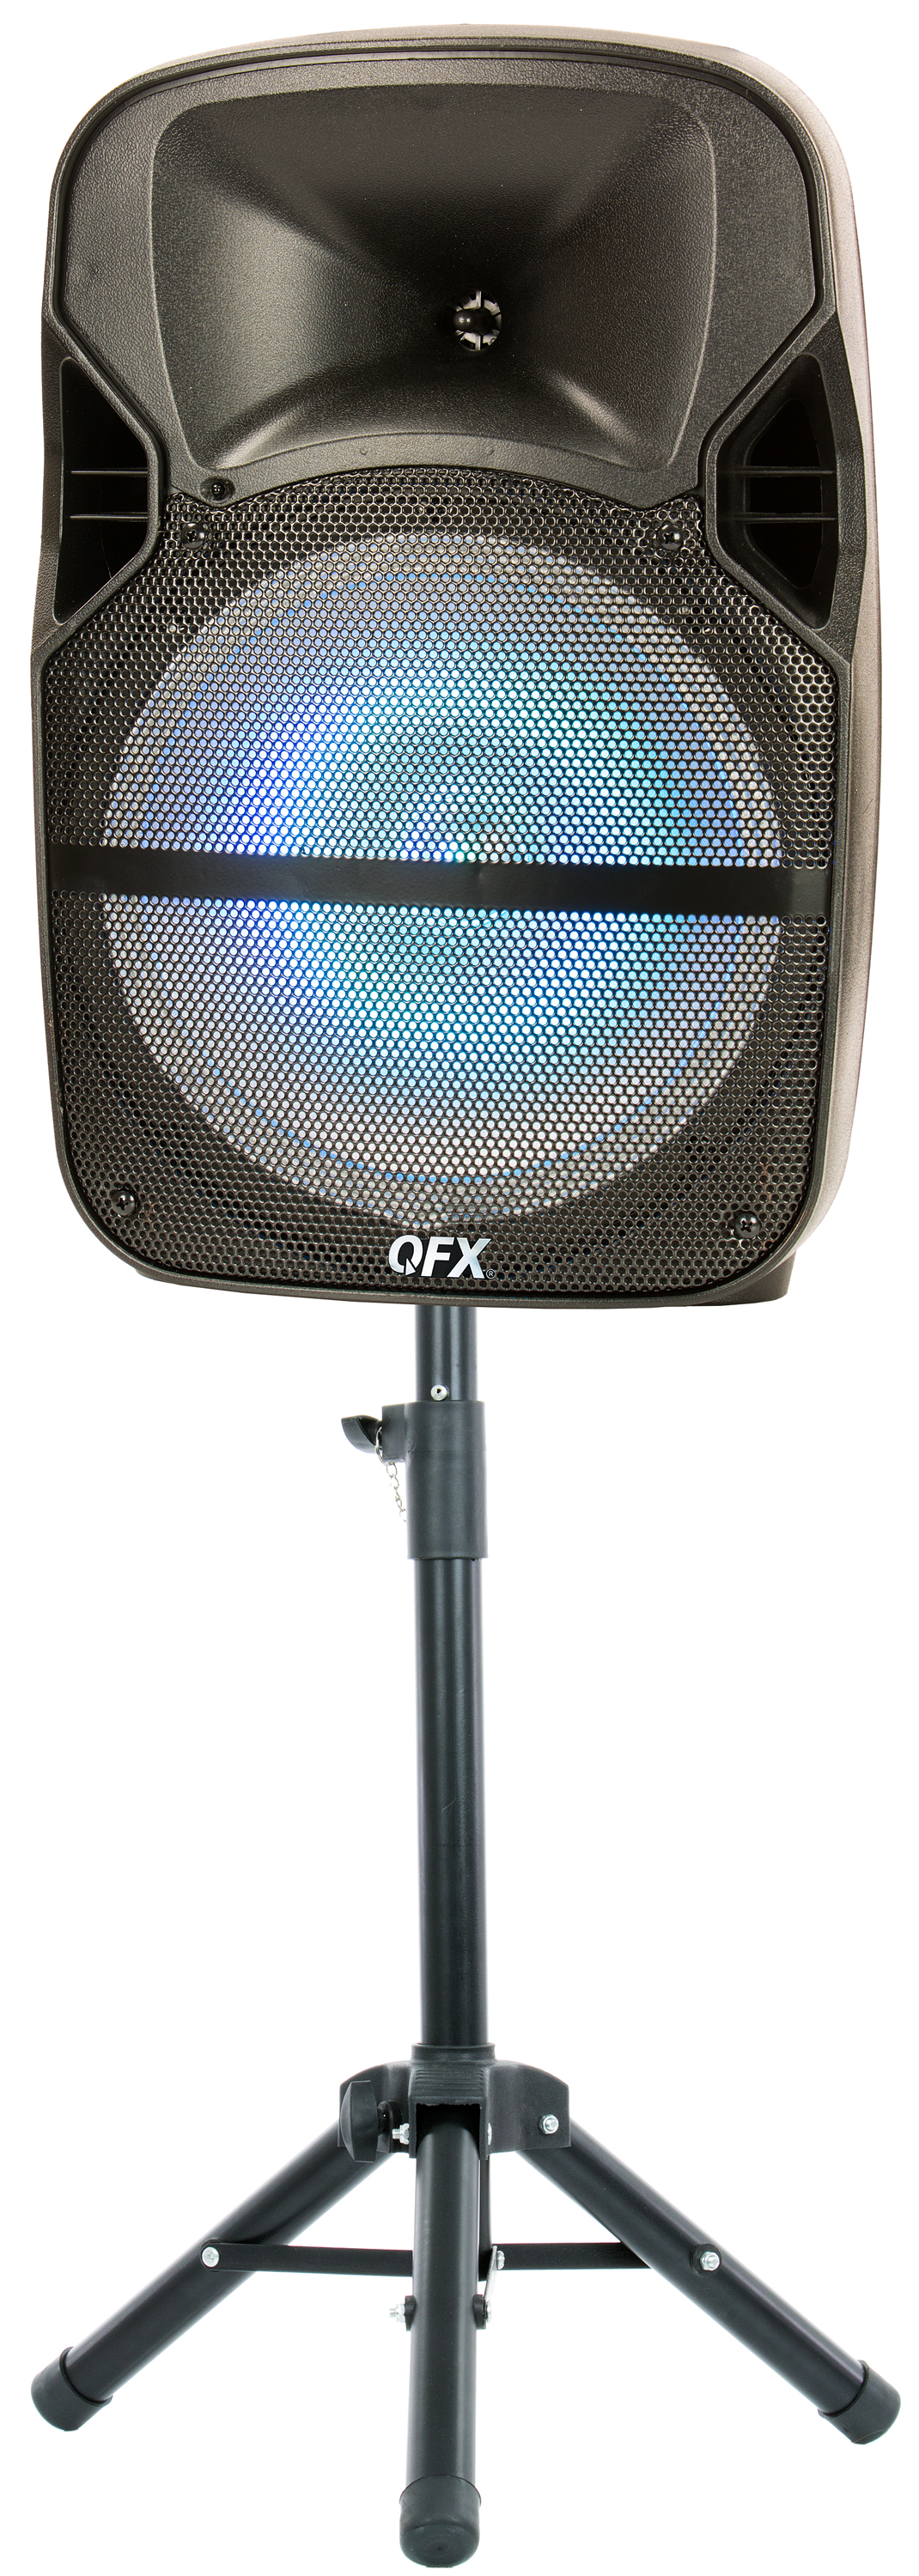 QFX PBX-61155 15" 4600W Portable Bluetooth Speaker (Bonus Stand Included) - image 3 of 7